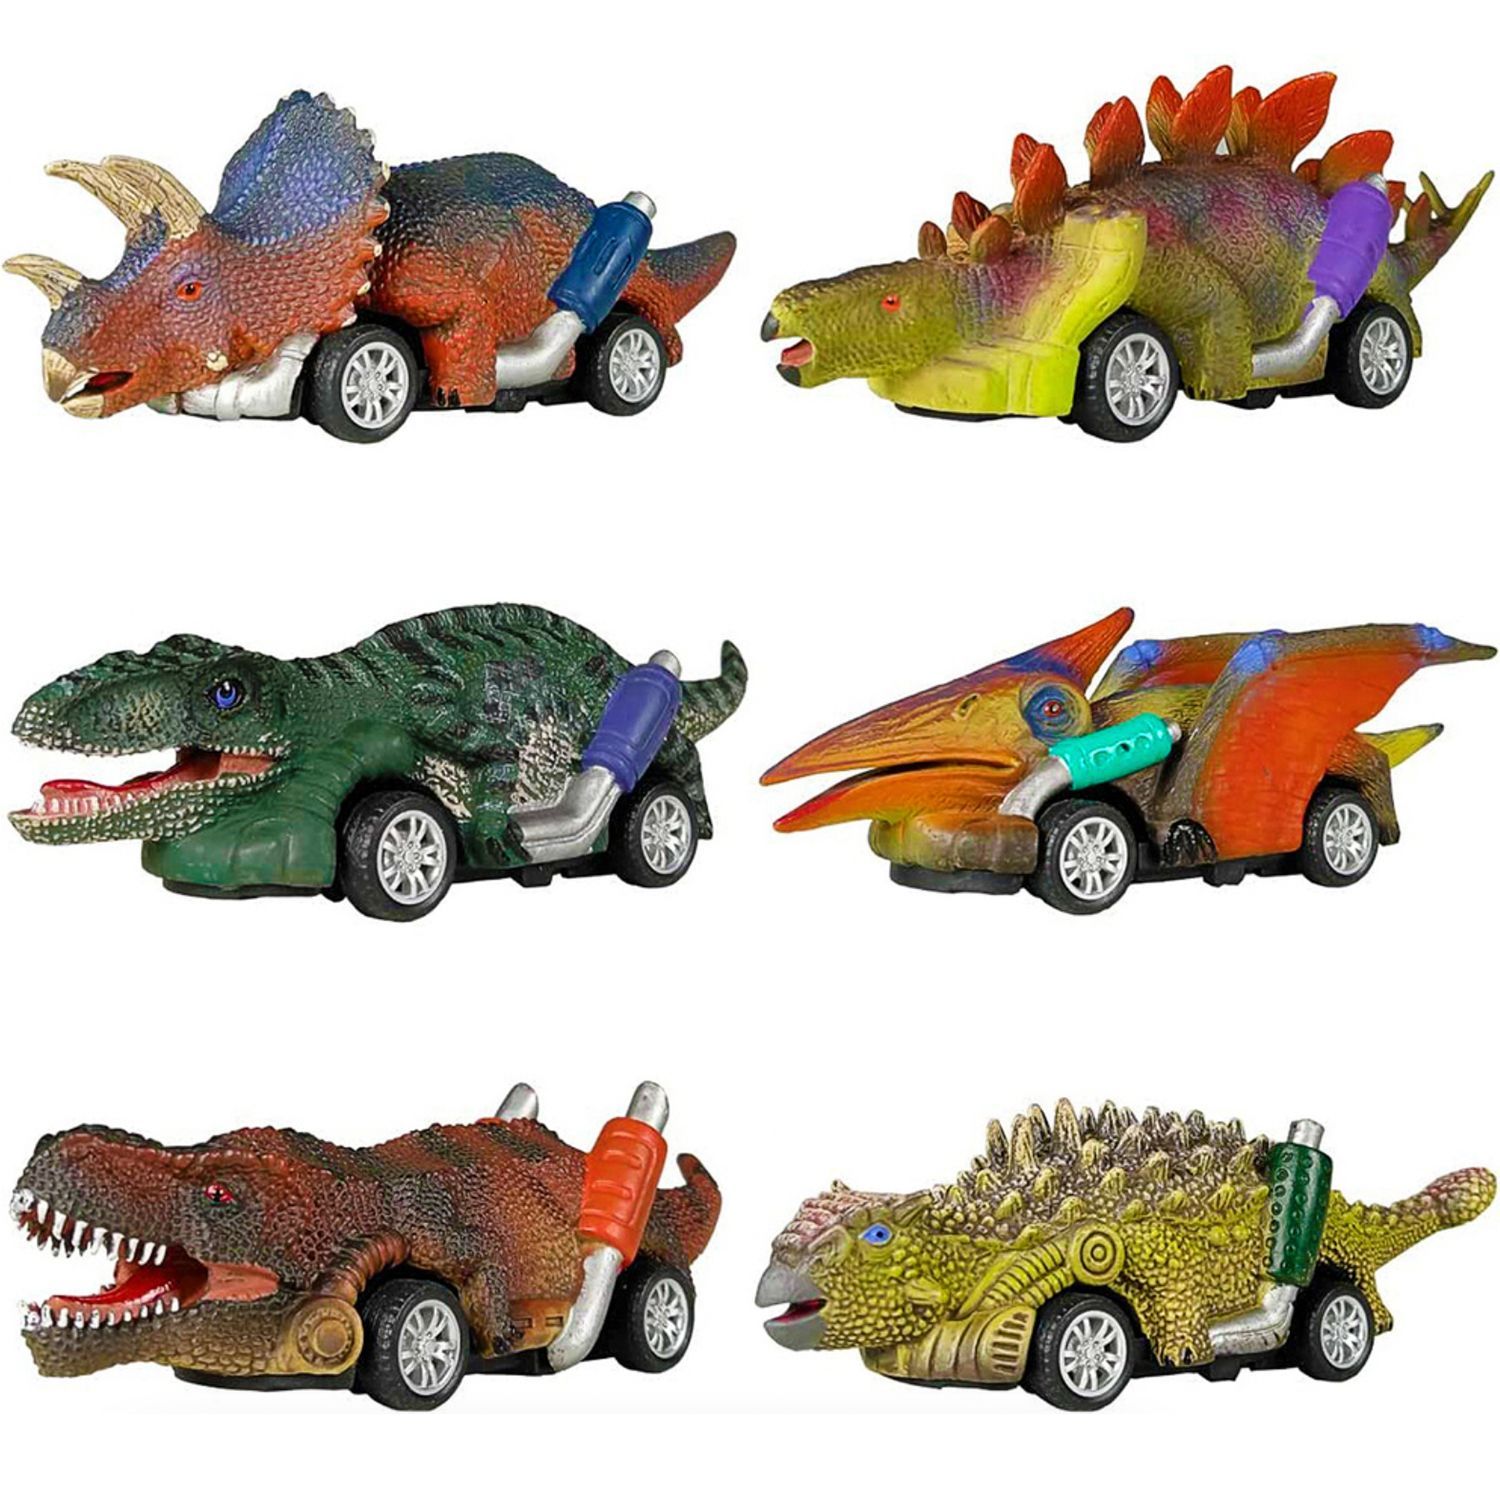 Машинки с динозаврами. Хот Вилс Трицератопс машинка. Хот Вилс динозавр машинка. Хот Вилс машинки динозавры коллекция. Unic Toys Дино Party.